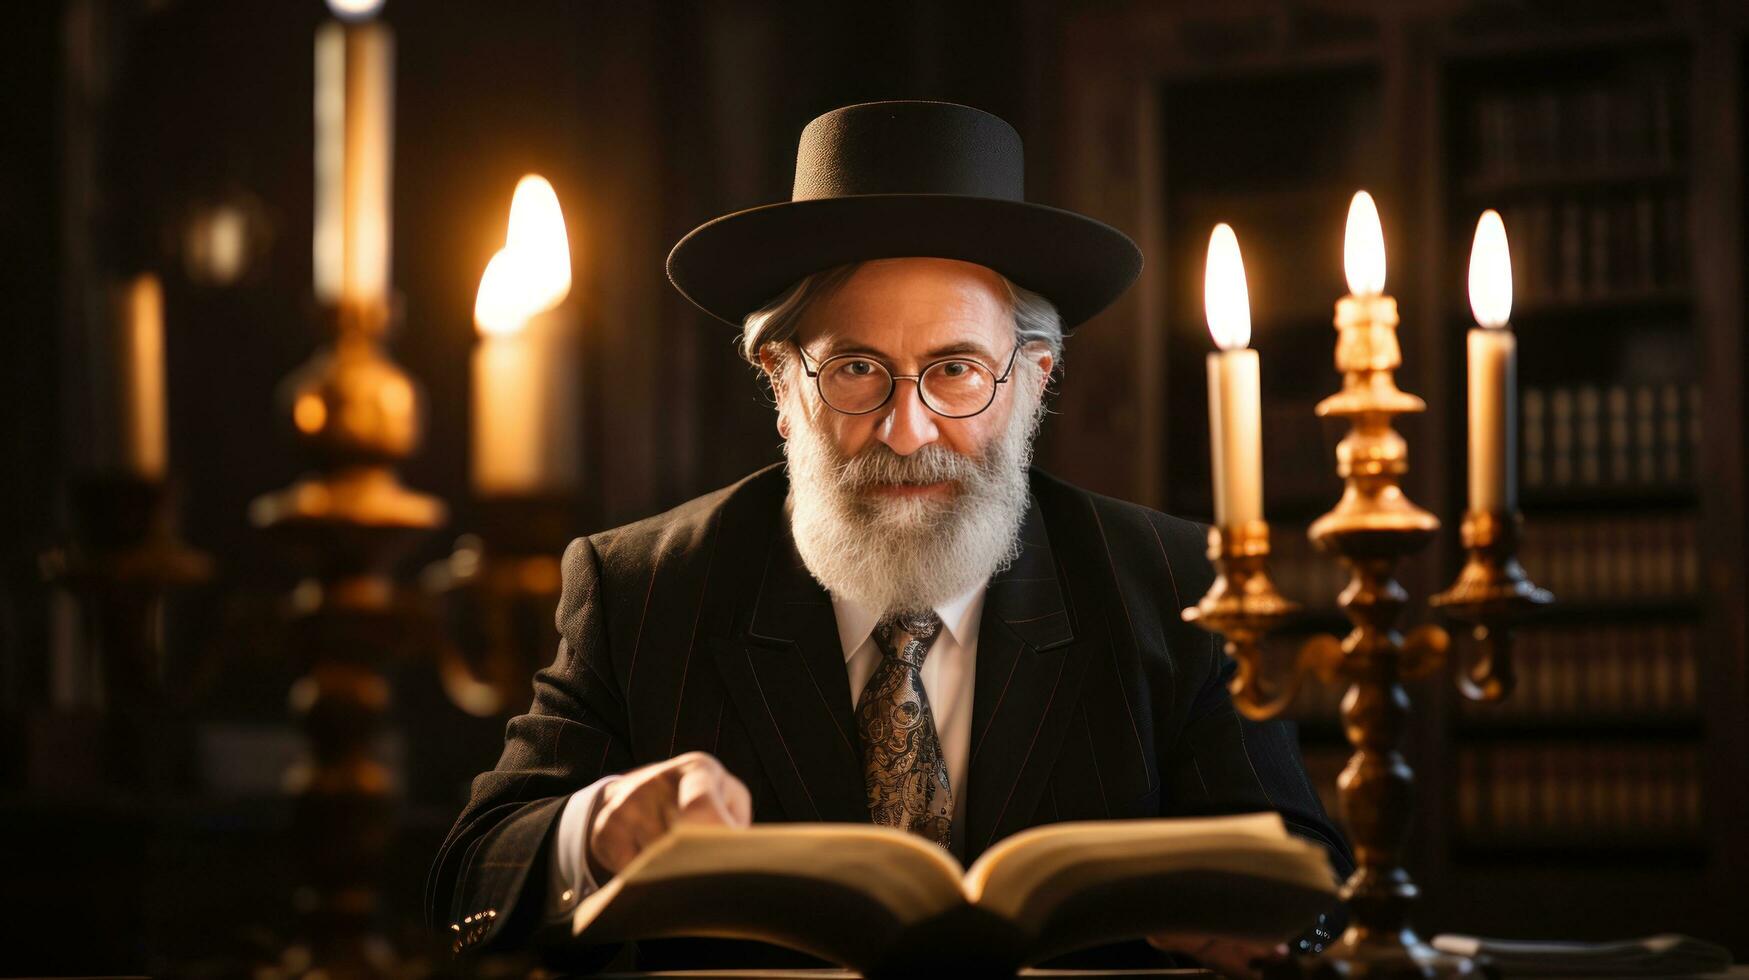 rabino leyendo Tora en sinagoga en Janucá foto